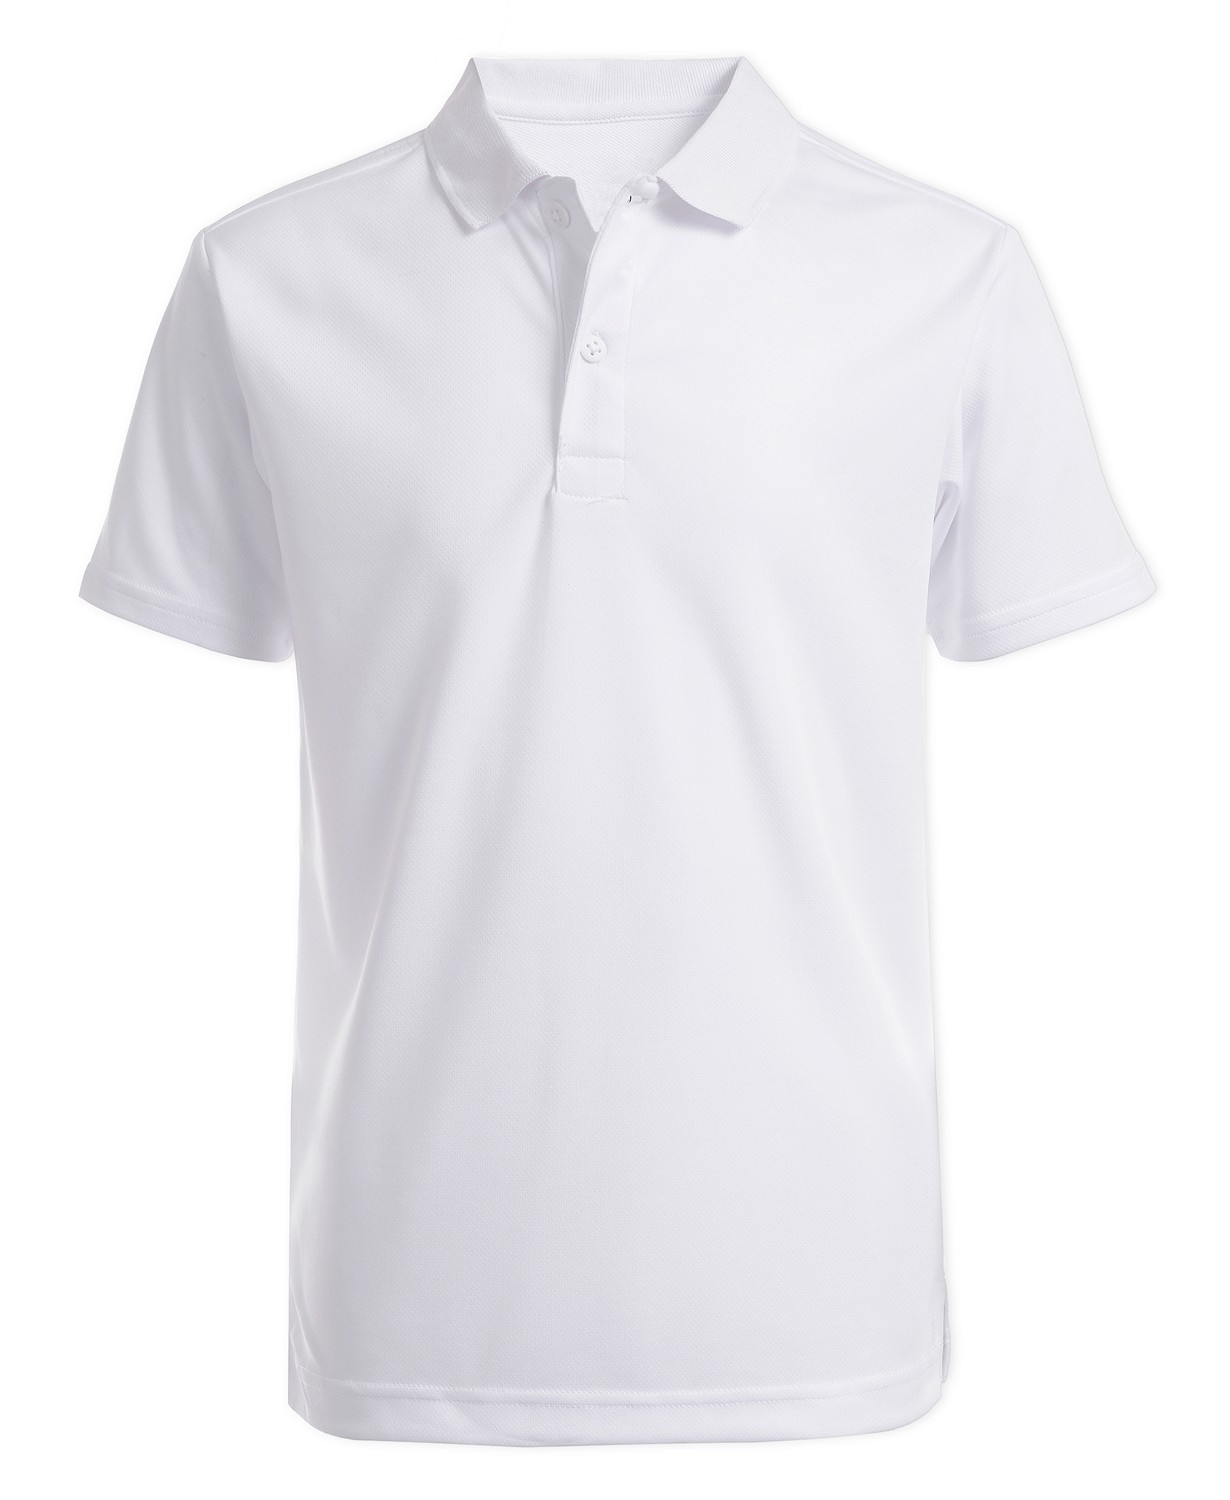 Nautica Boys' School Uniform Long Sleeve Polo Shirt 